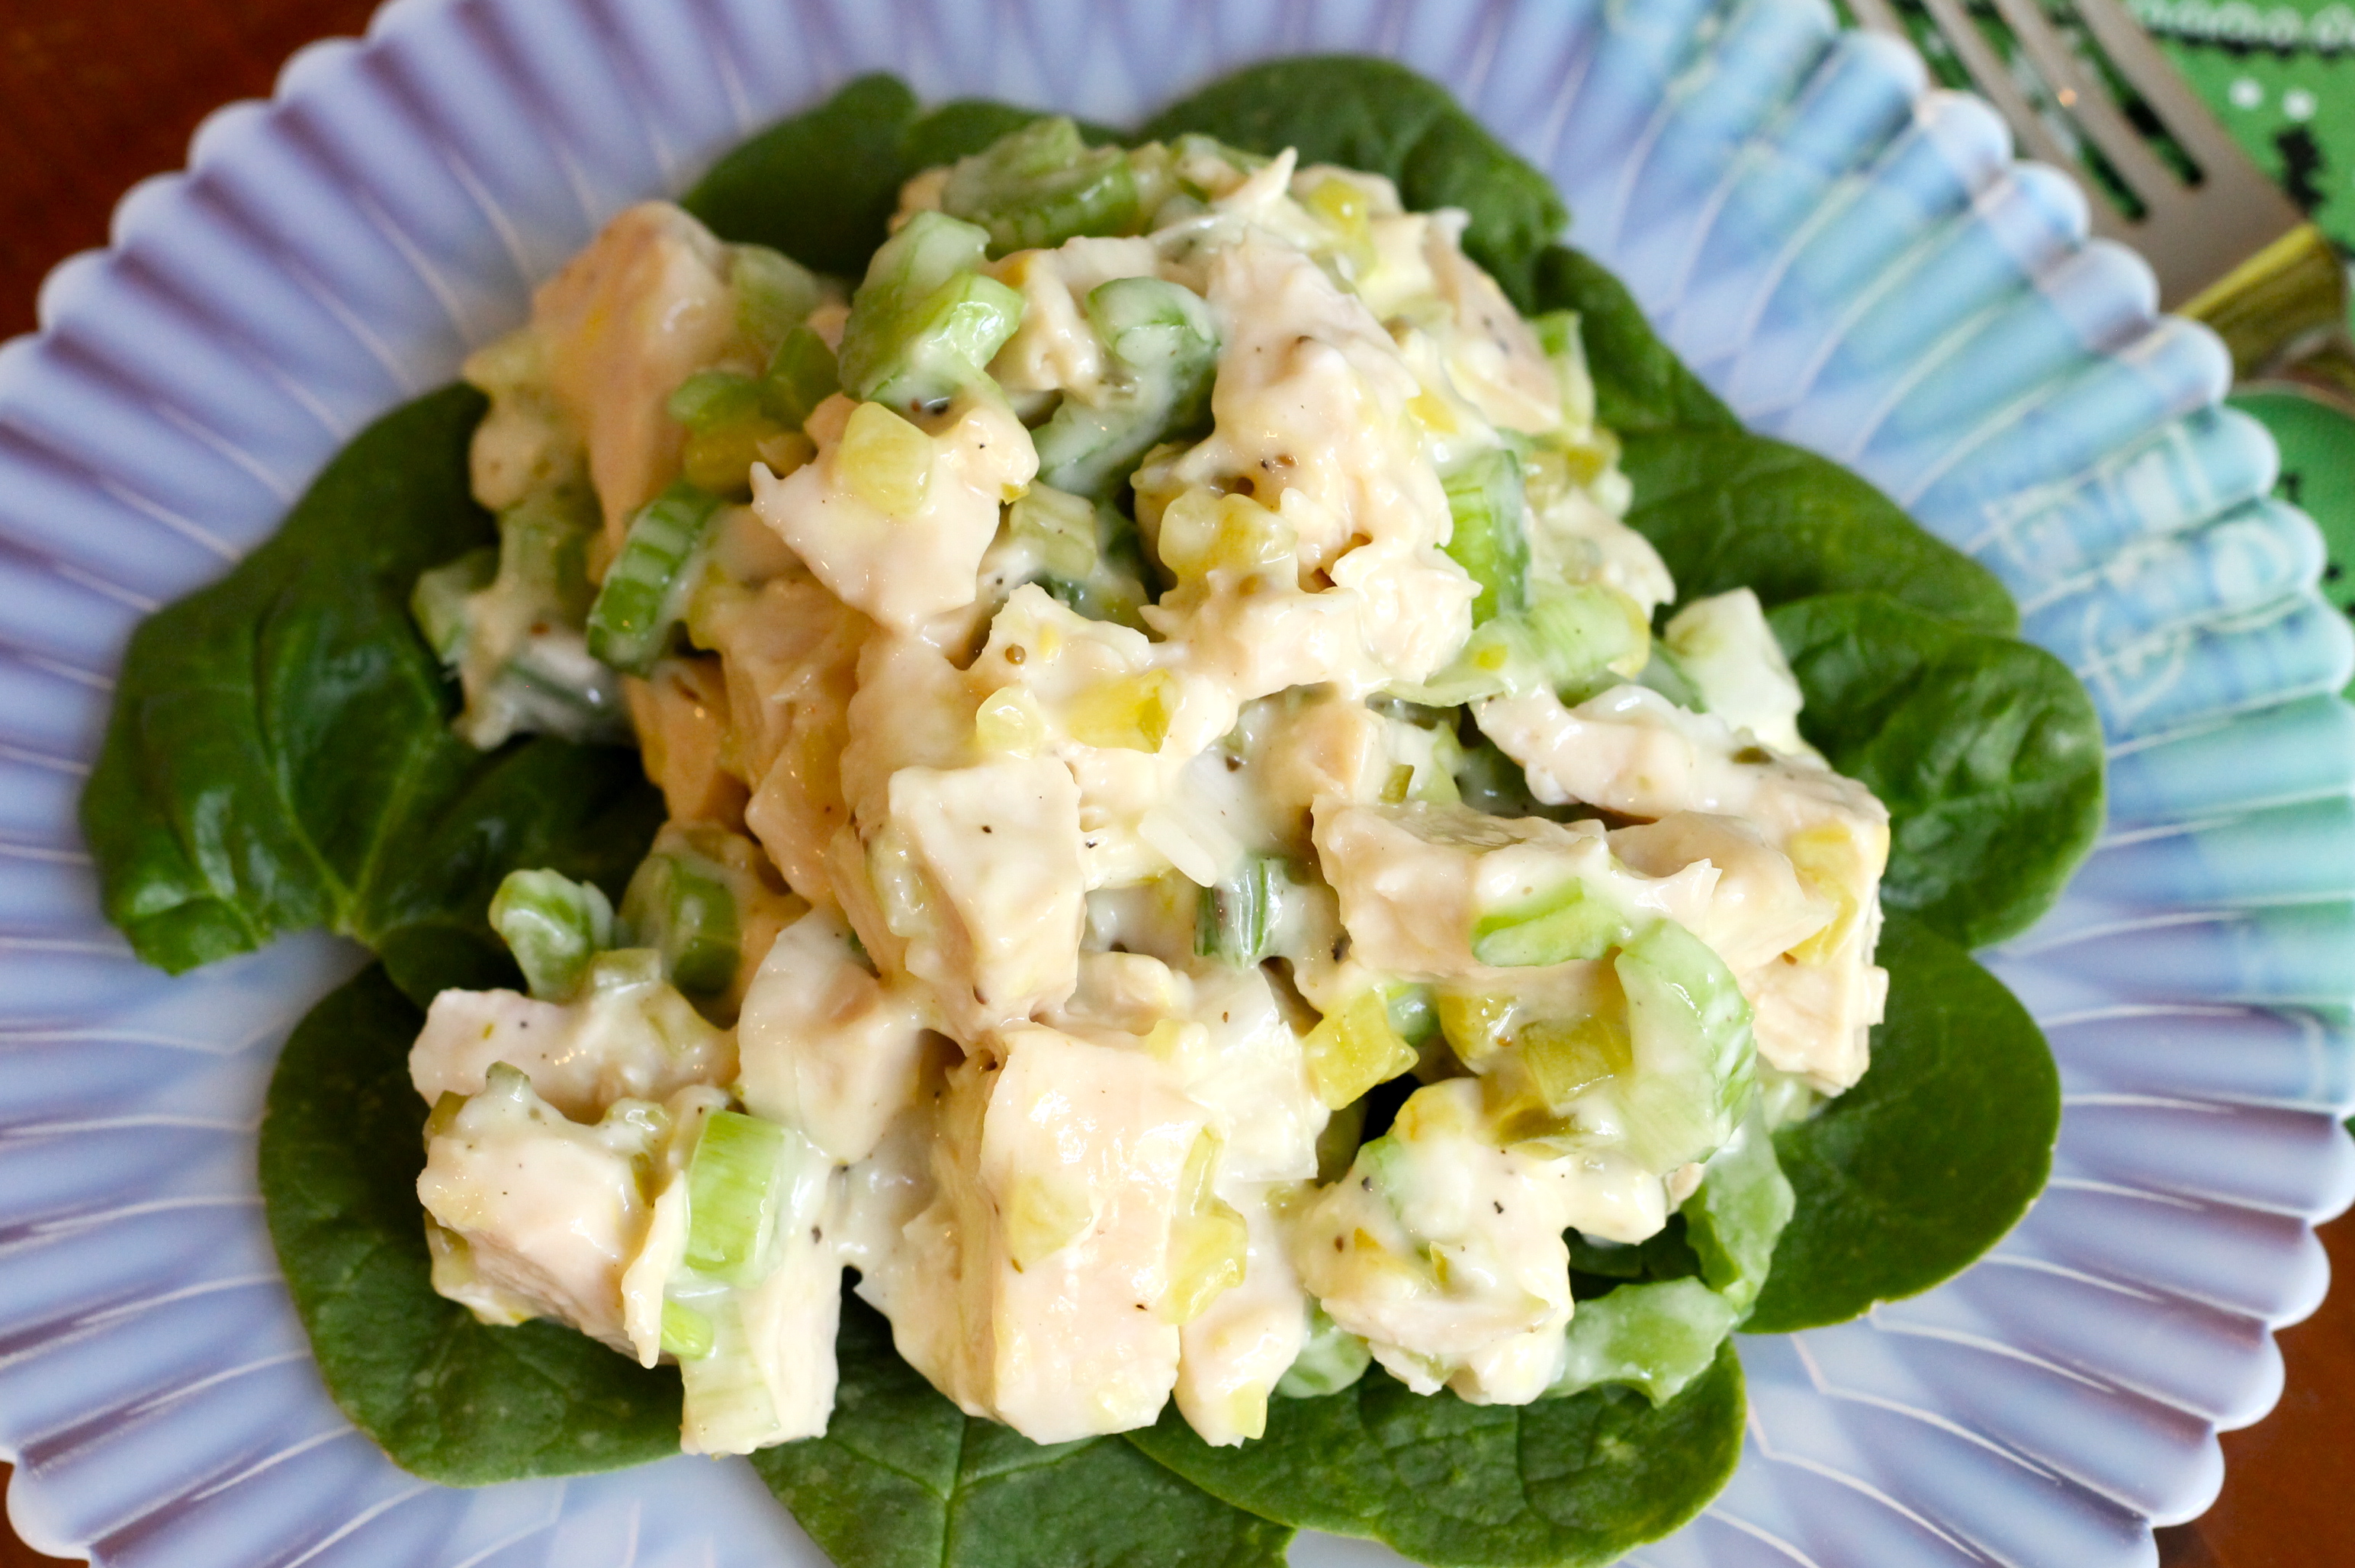 IMG 0883 - Chickpea Salad Recipe